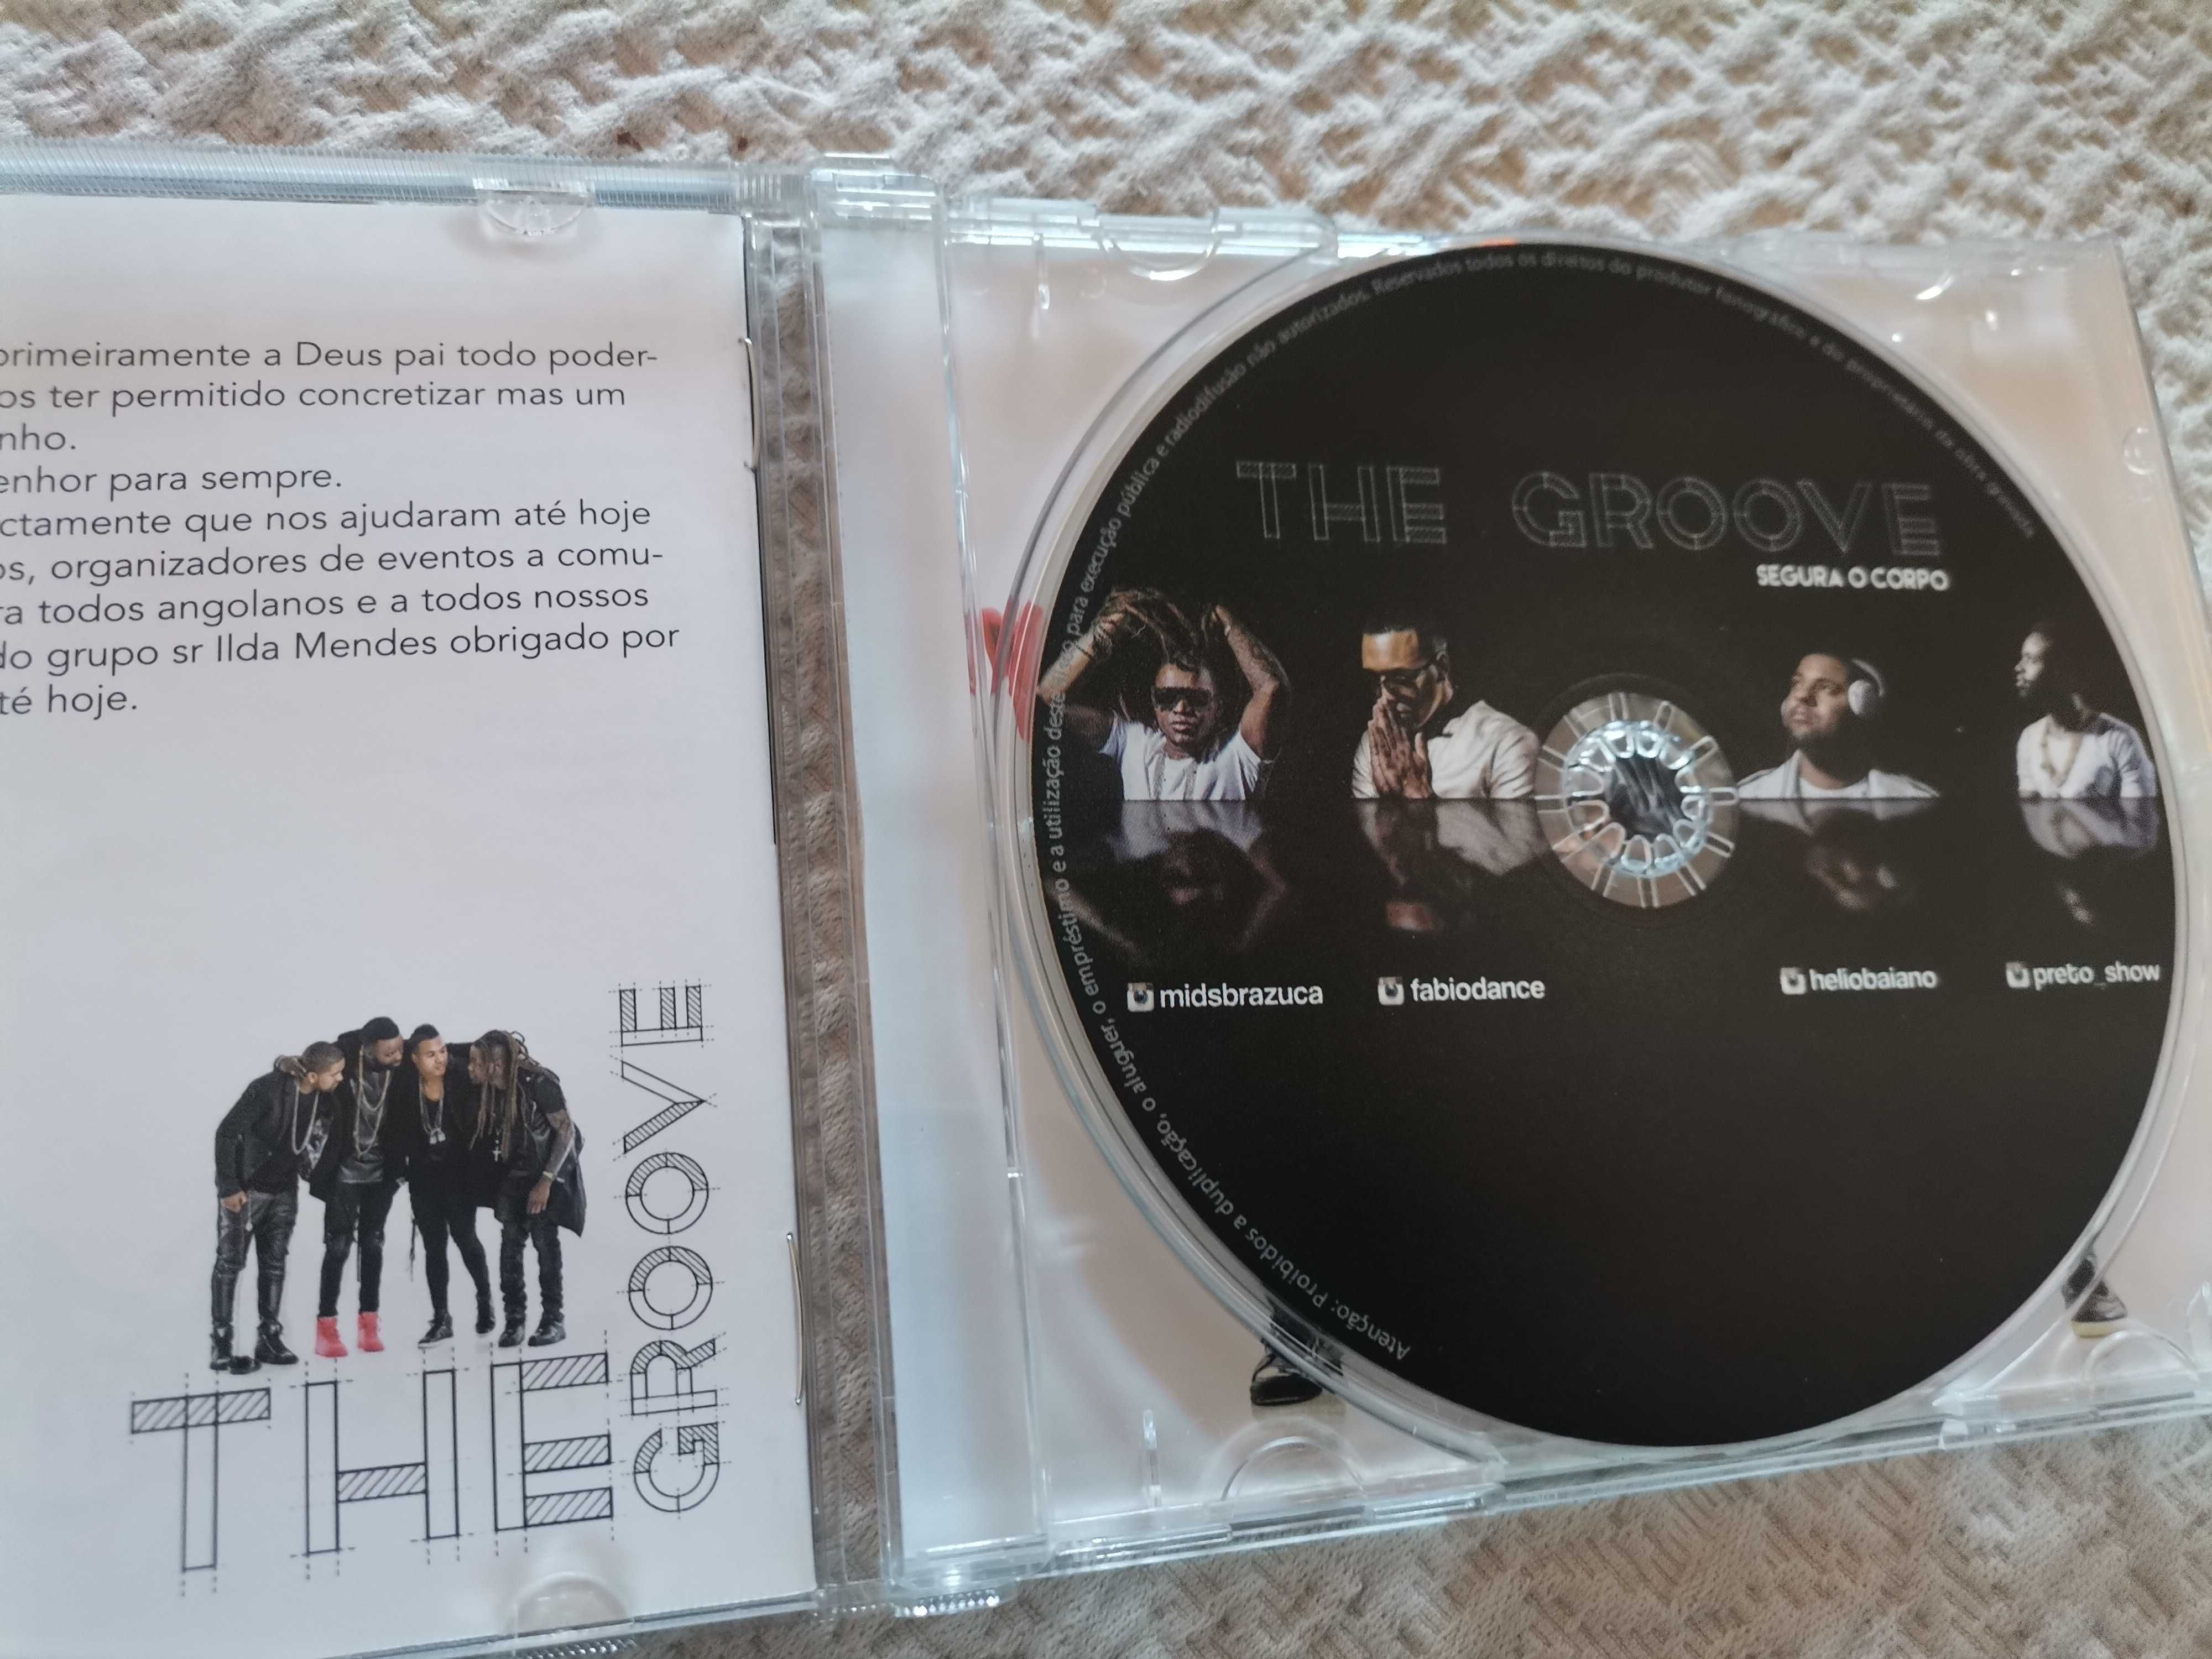 The Groove - Segura o corpo CD Novos!